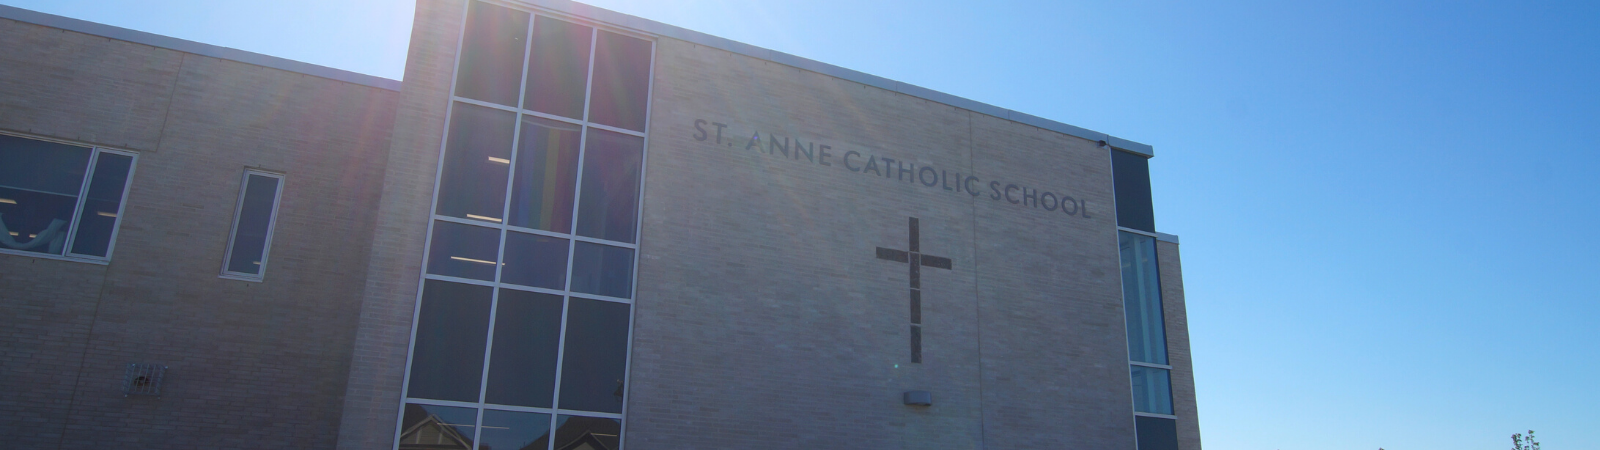 Exterior of St. Anne Catholic School